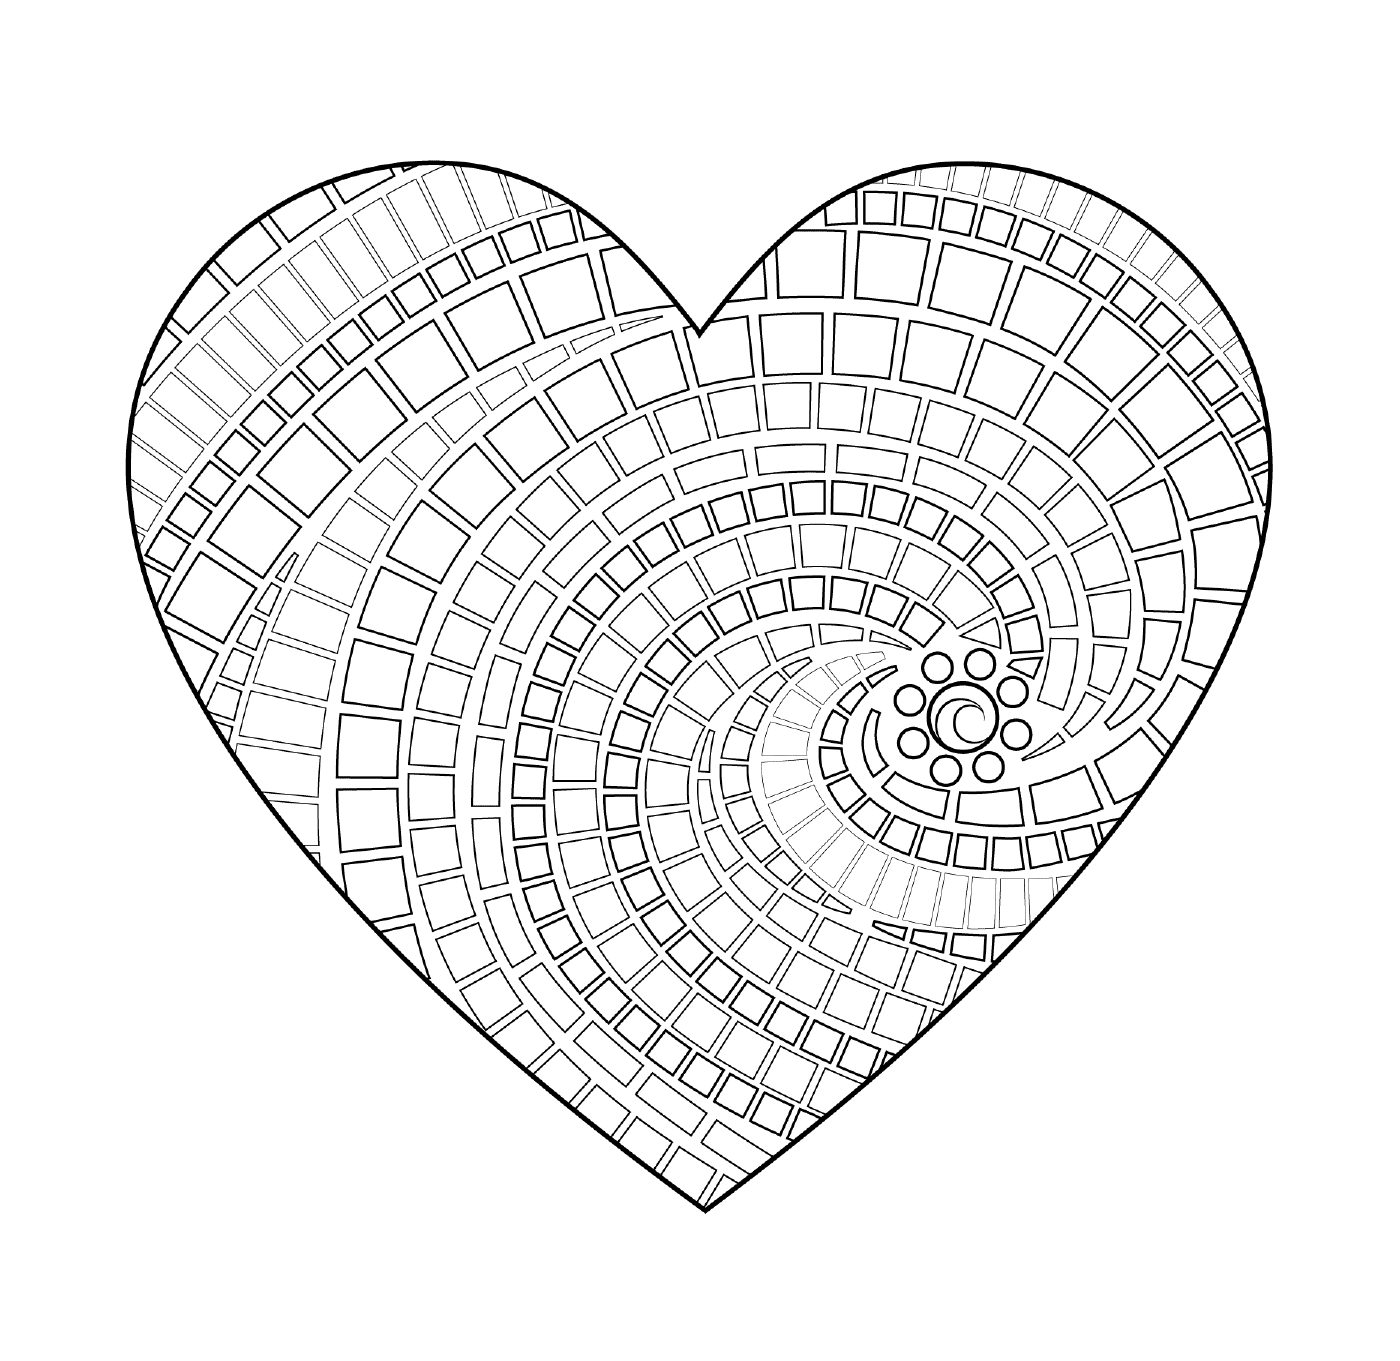  Мозаика сердца для радостного Дня Святого Валентина 